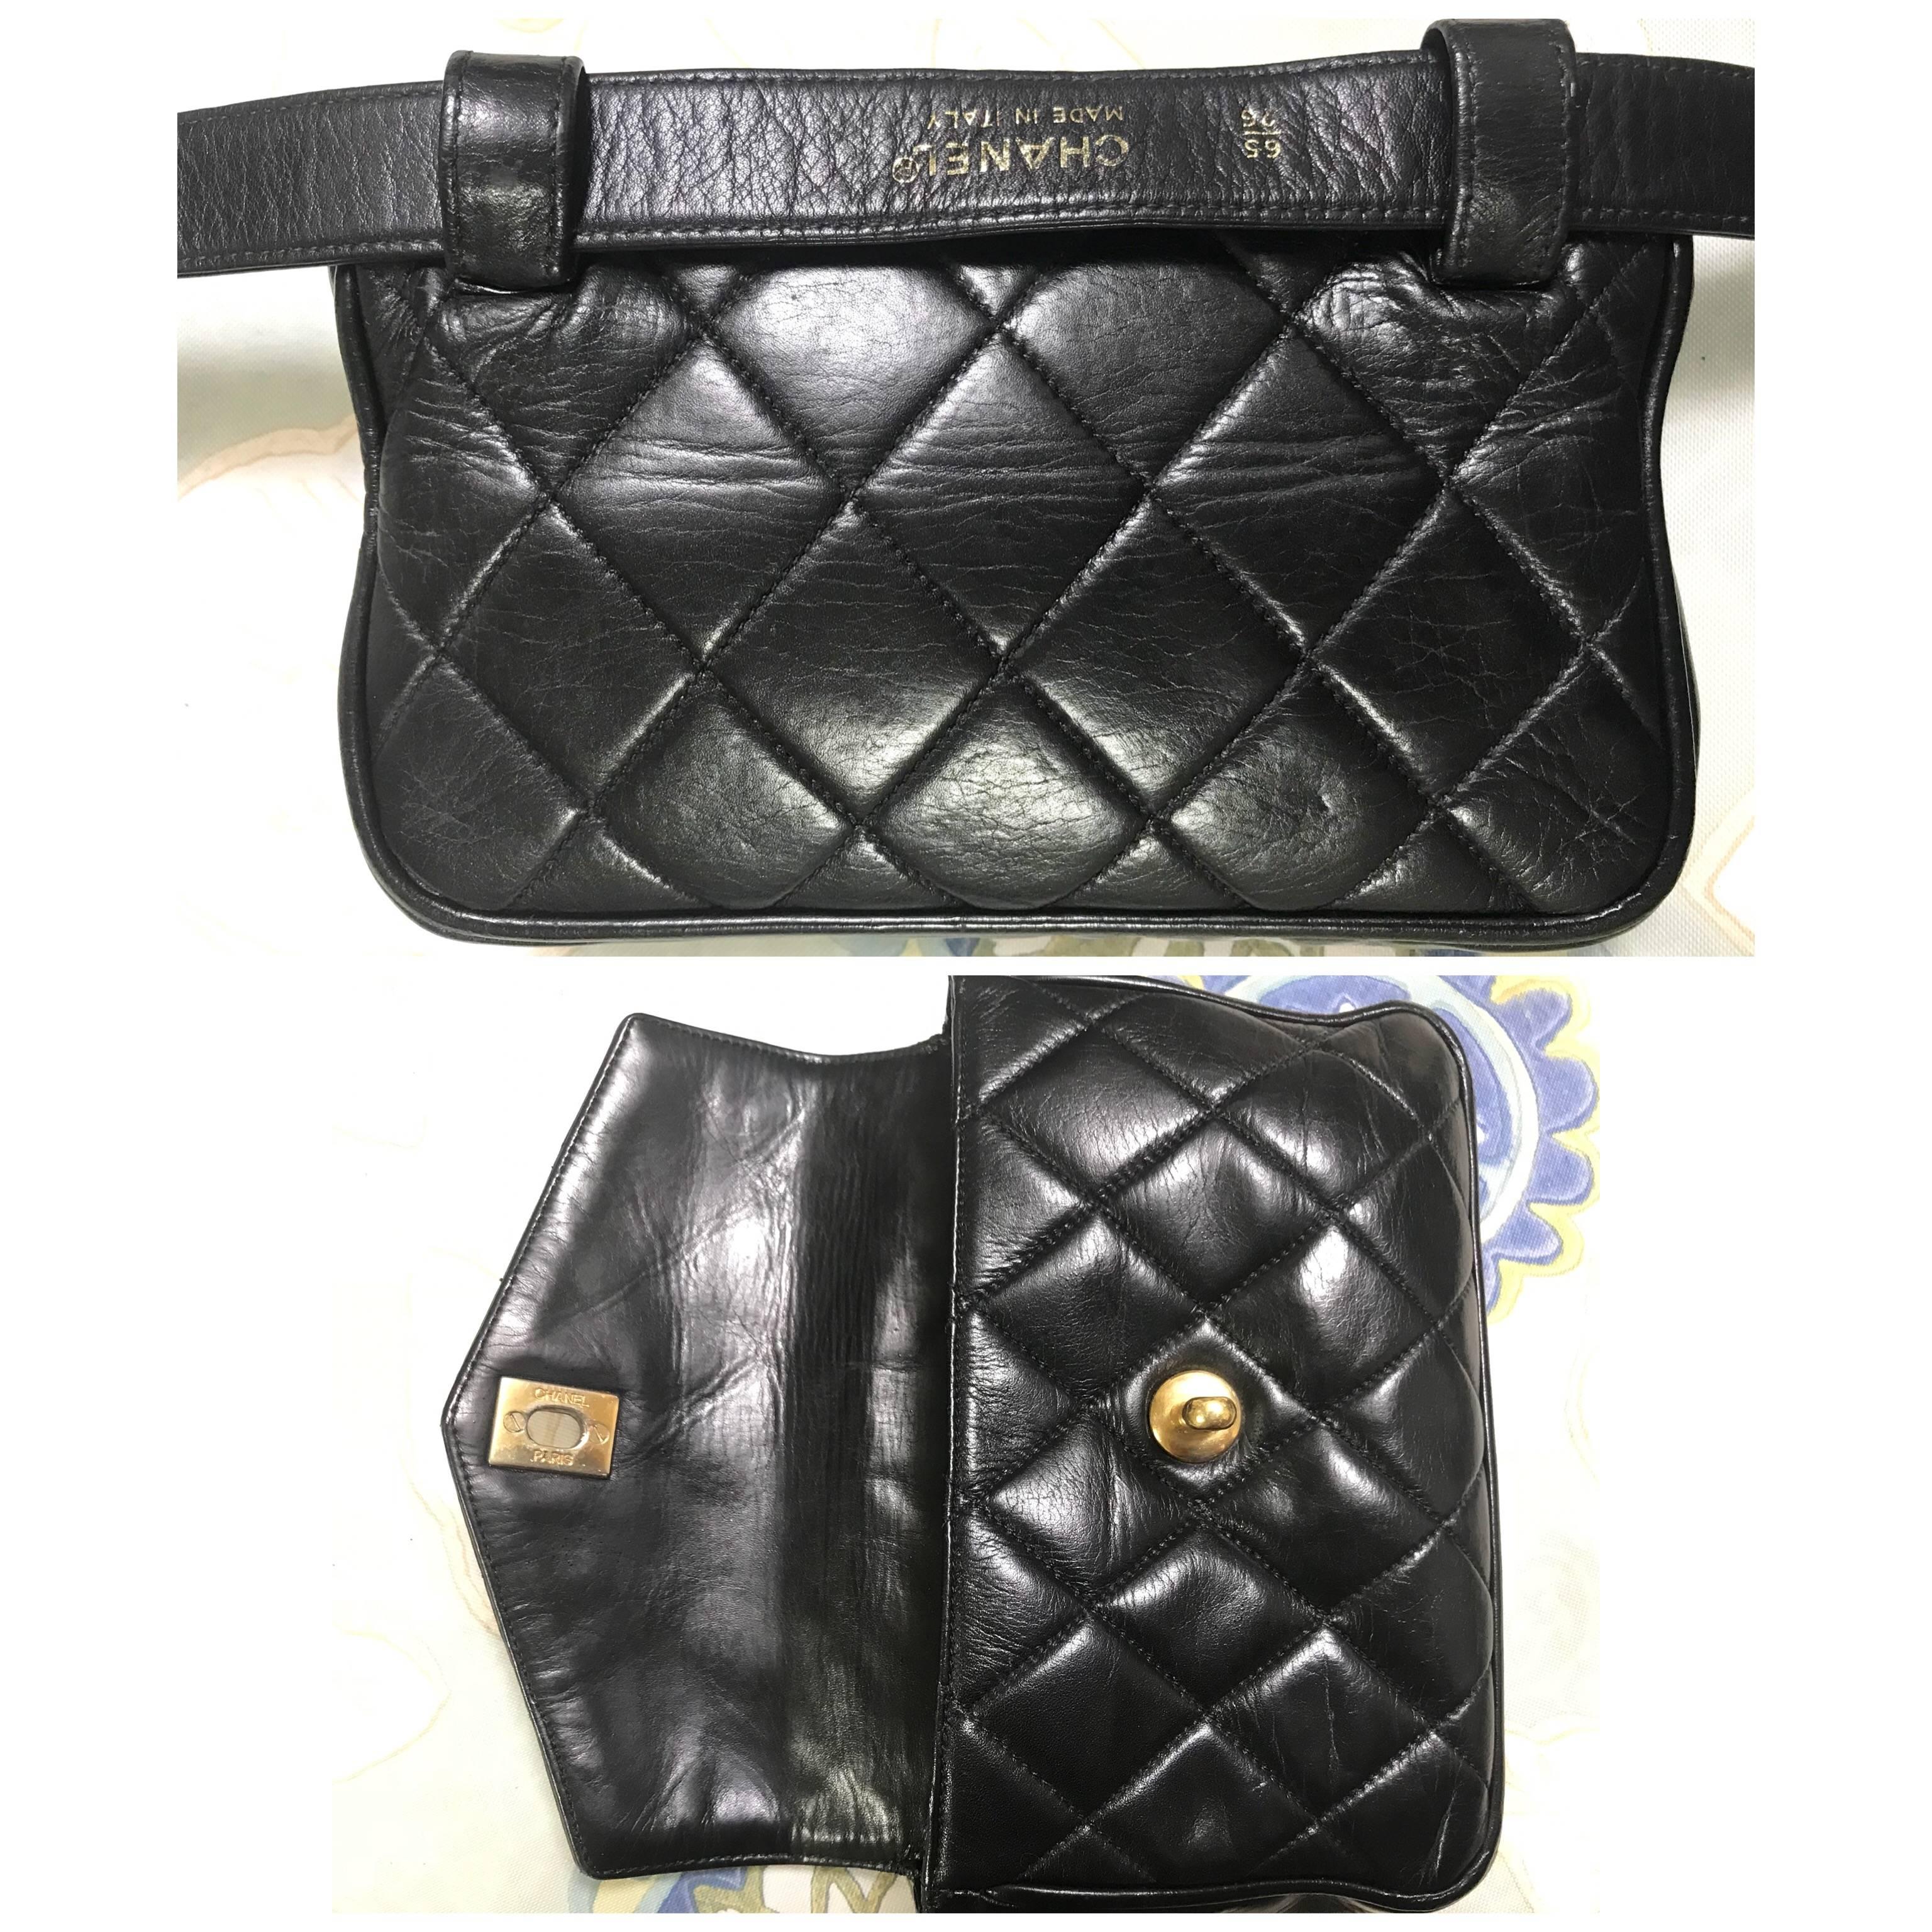 1980s-1990s. Vintage CHANEL black leather waist purse, fanny bag with belt and CC motif. 
Waist size: 23.6